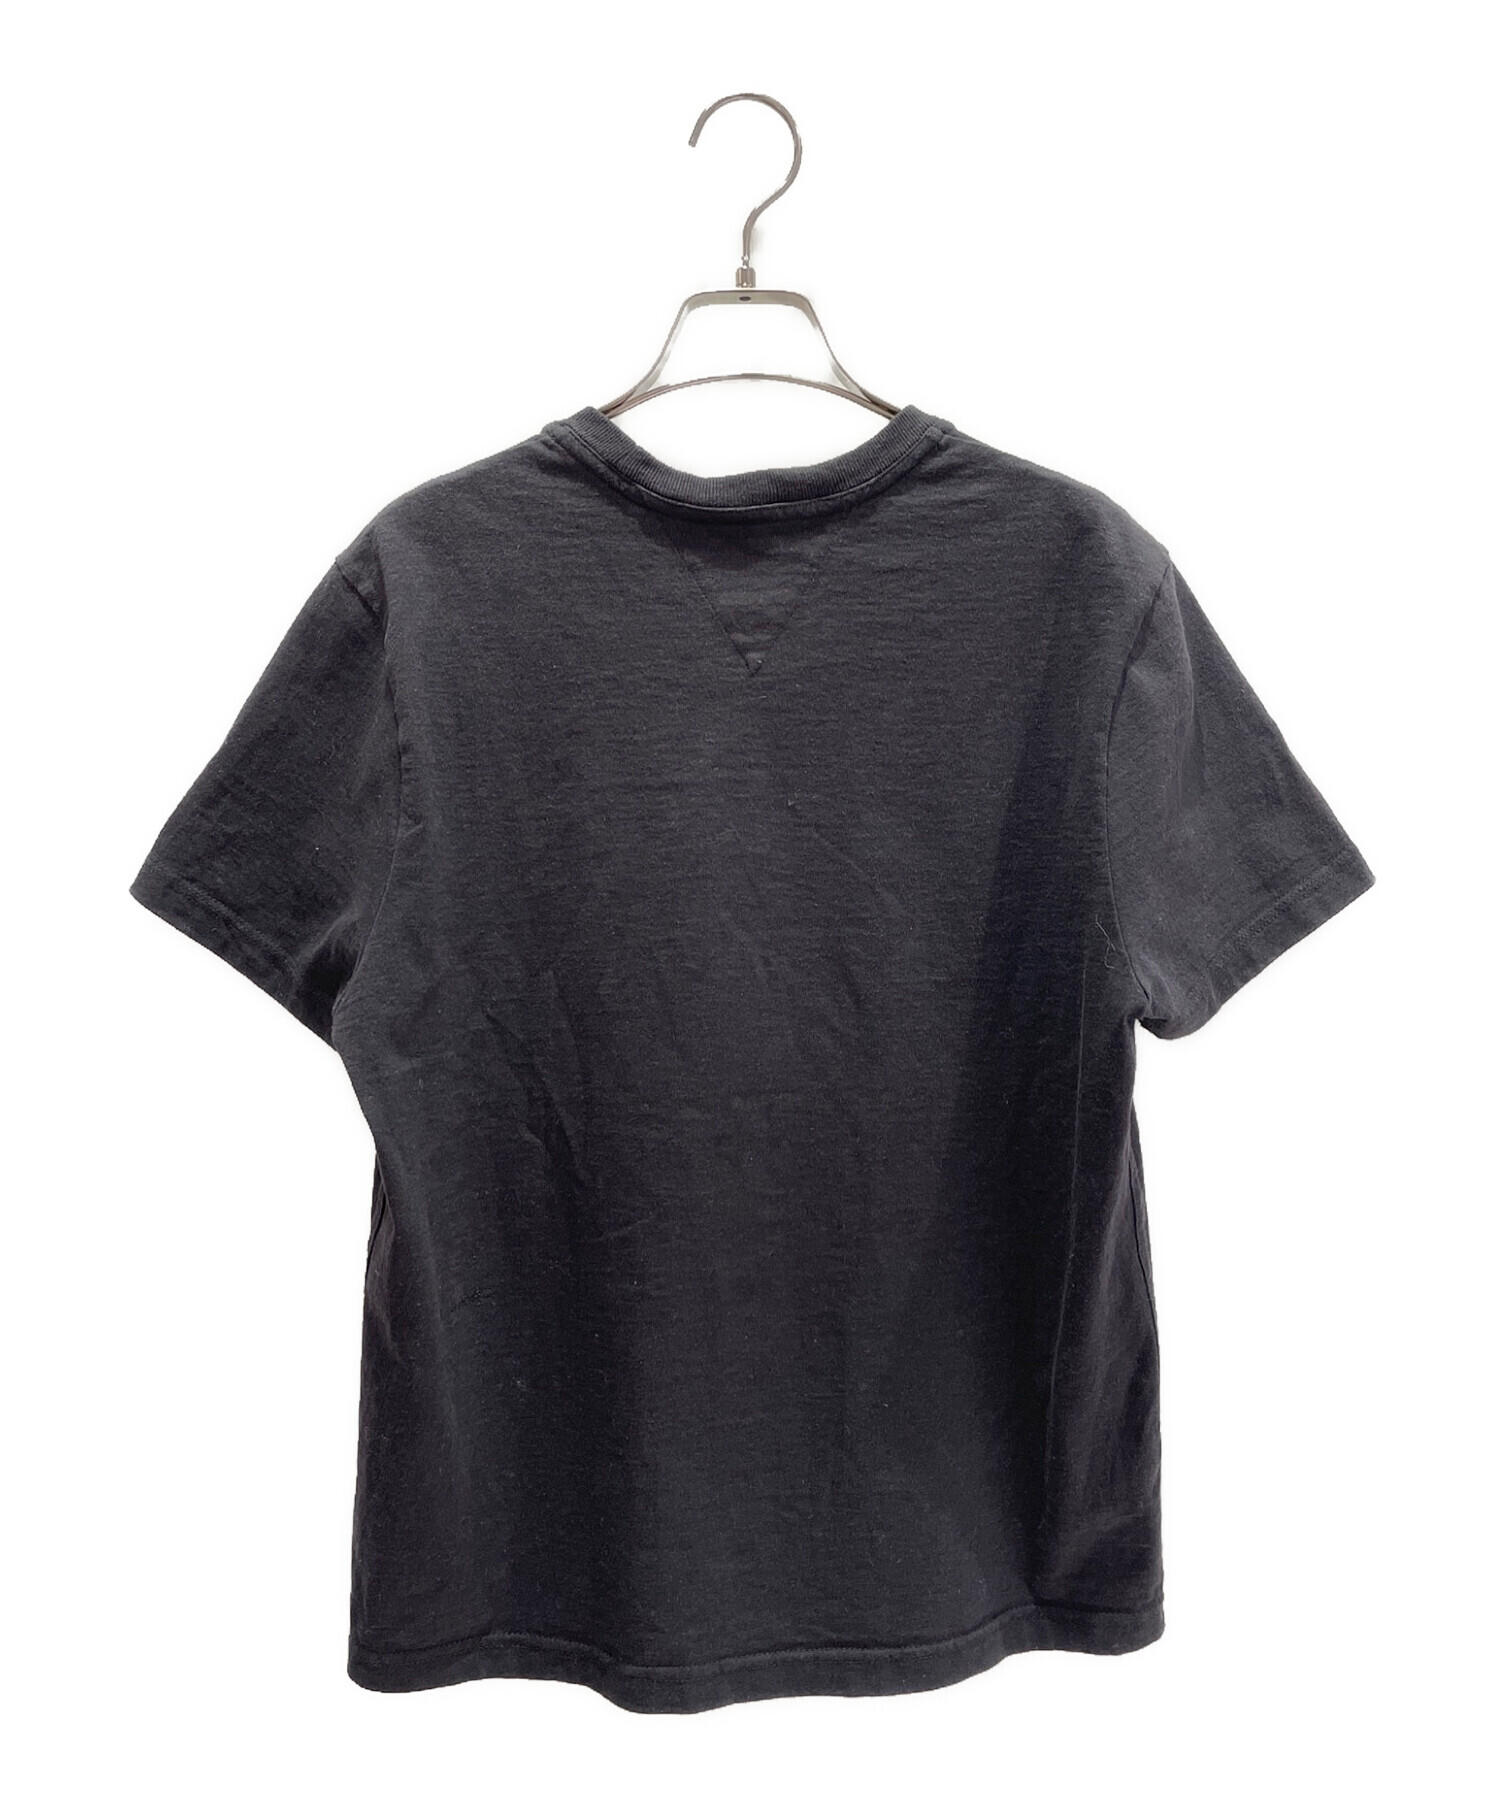 BOTTEGA VENETA (ボッテガベネタ) SUNRISE Tシャツ ブラック サイズ:S